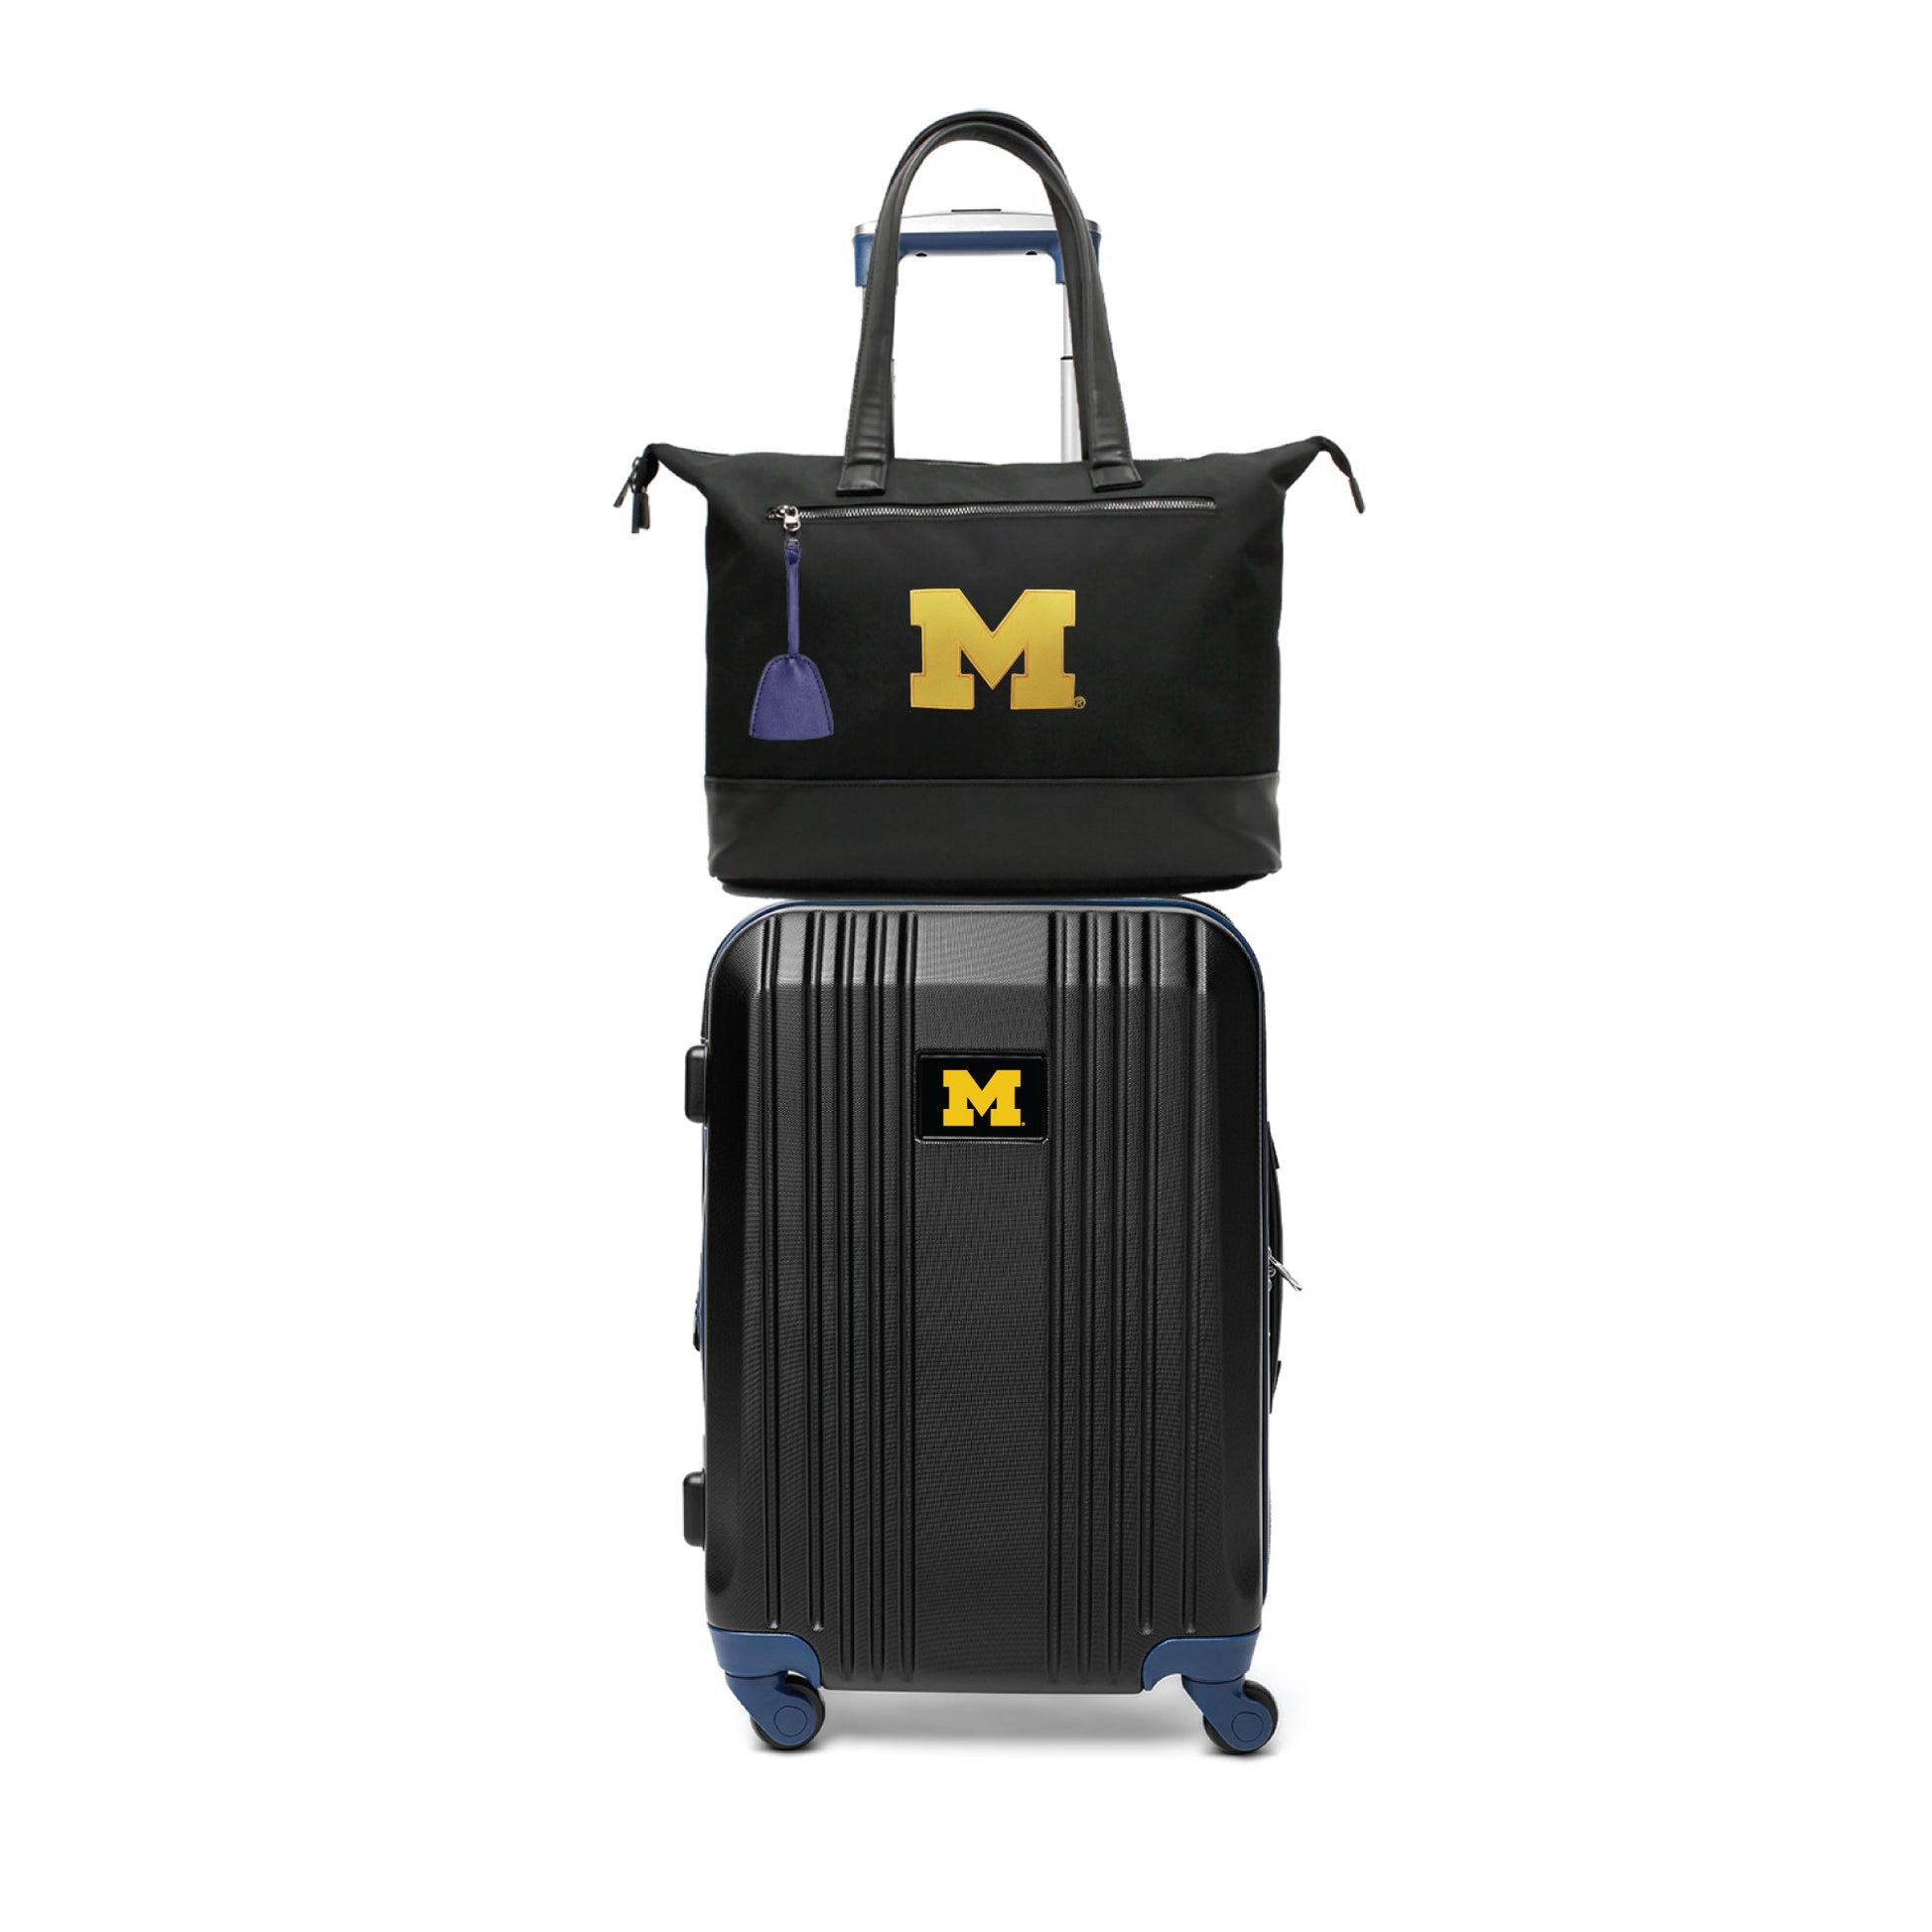 Michigan Wolverines Premium Laptop Tote Bag and Luggage Set